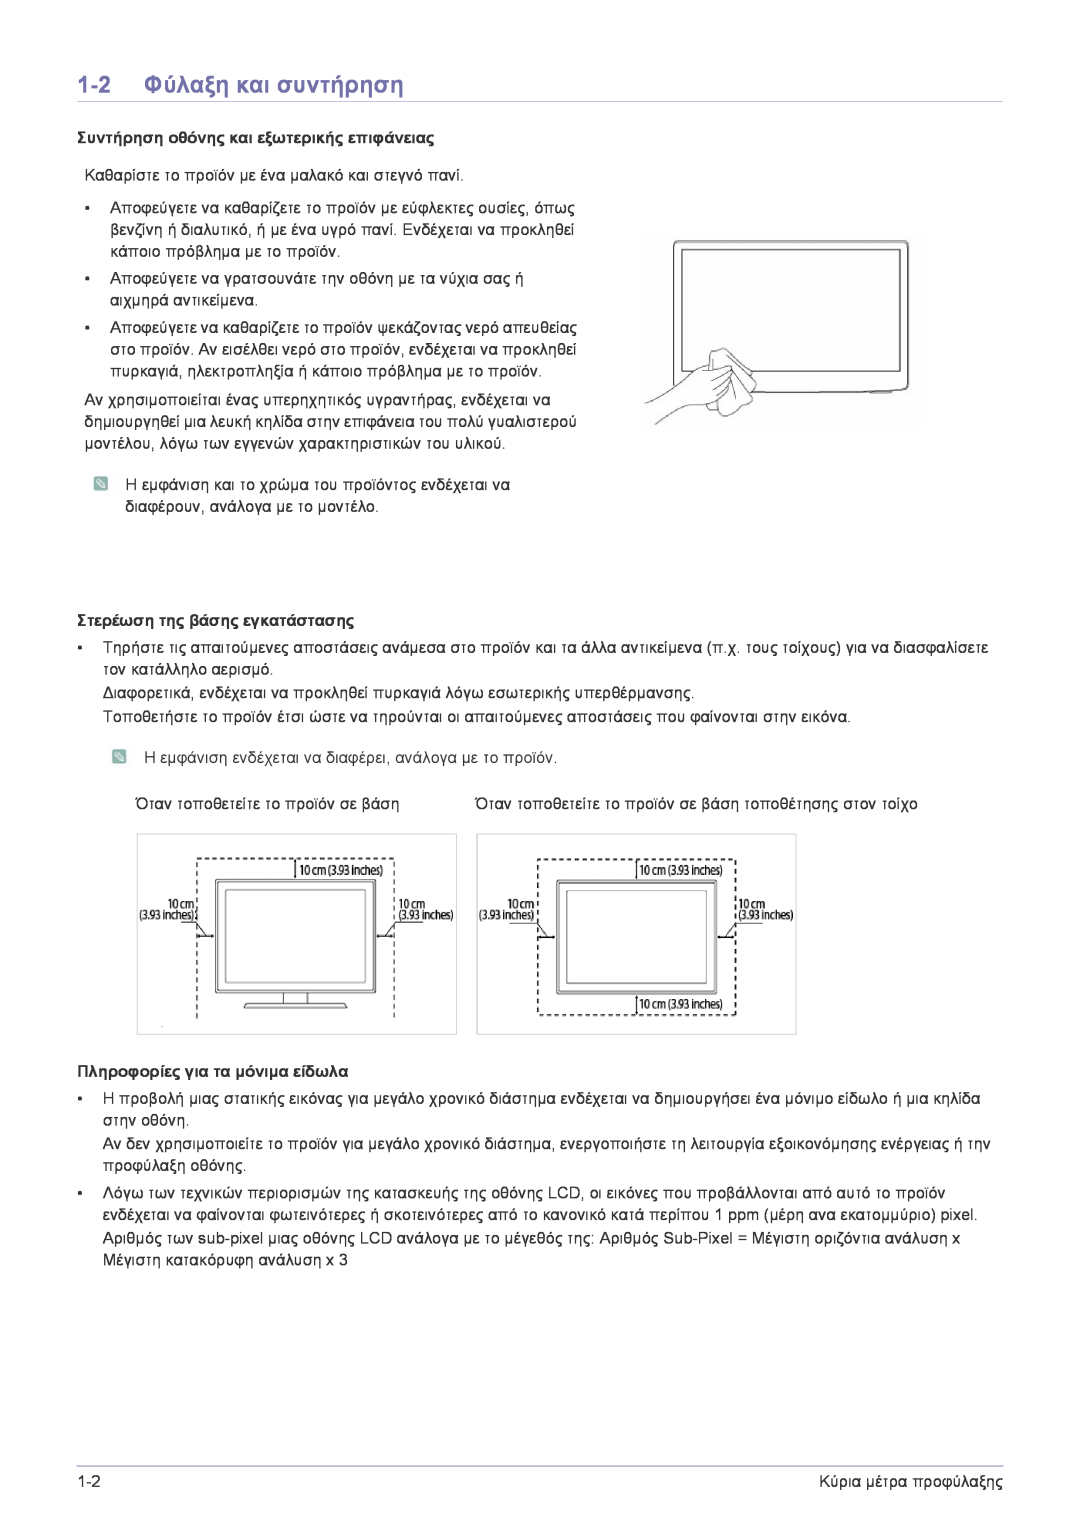 Samsung LS22FMDGF/EN 1-2 Φύλαξη και συντήρηση, Συντήρηση οθόνης και εξωτερικής επιφάνειας, Στερέωση της βάσης εγκατάστασης 